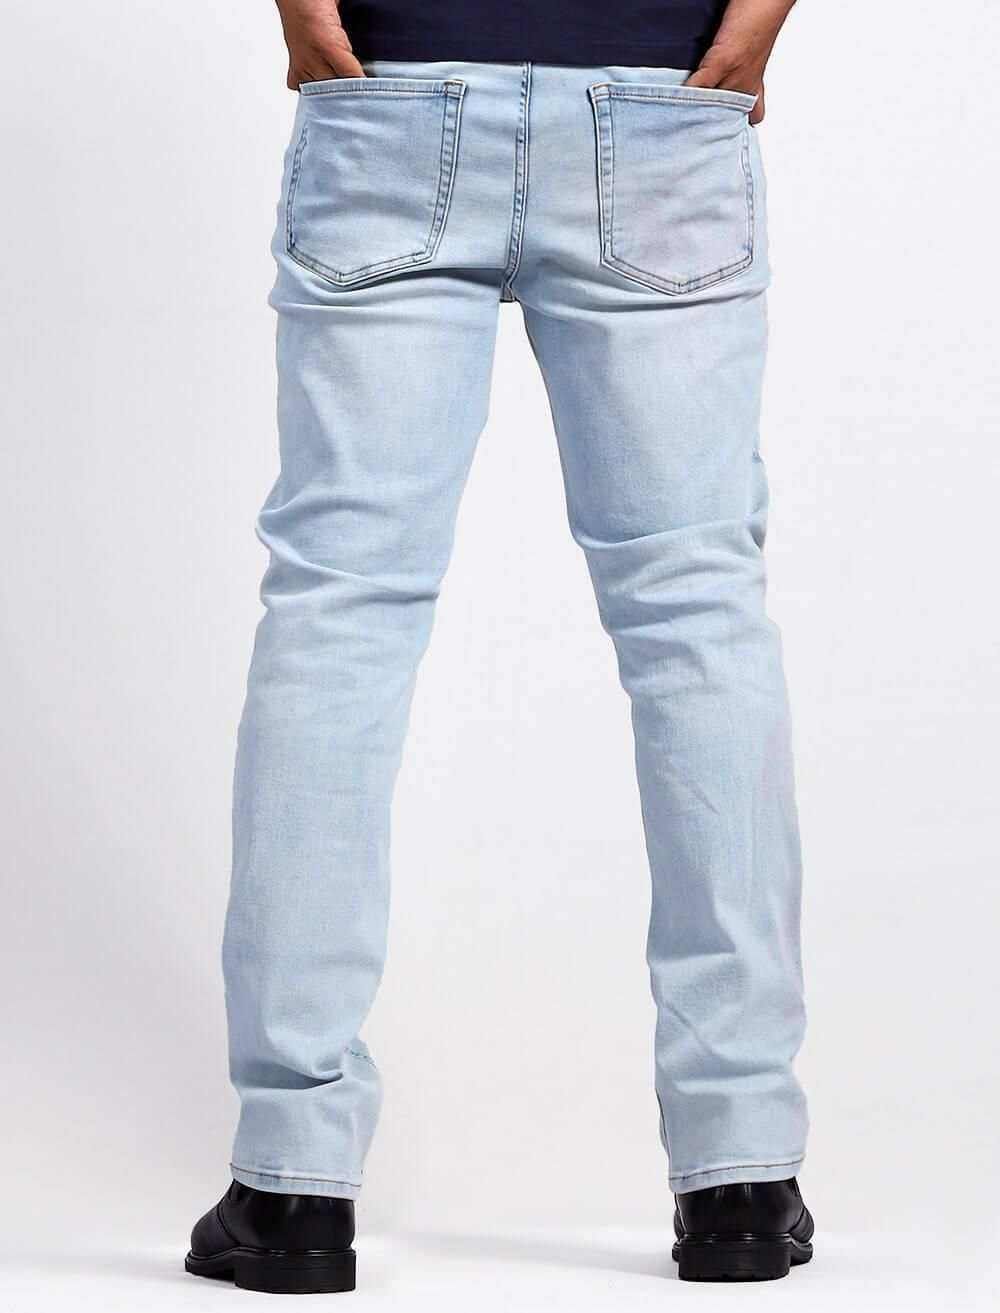 Slim-Fit Jeans - Blucheez